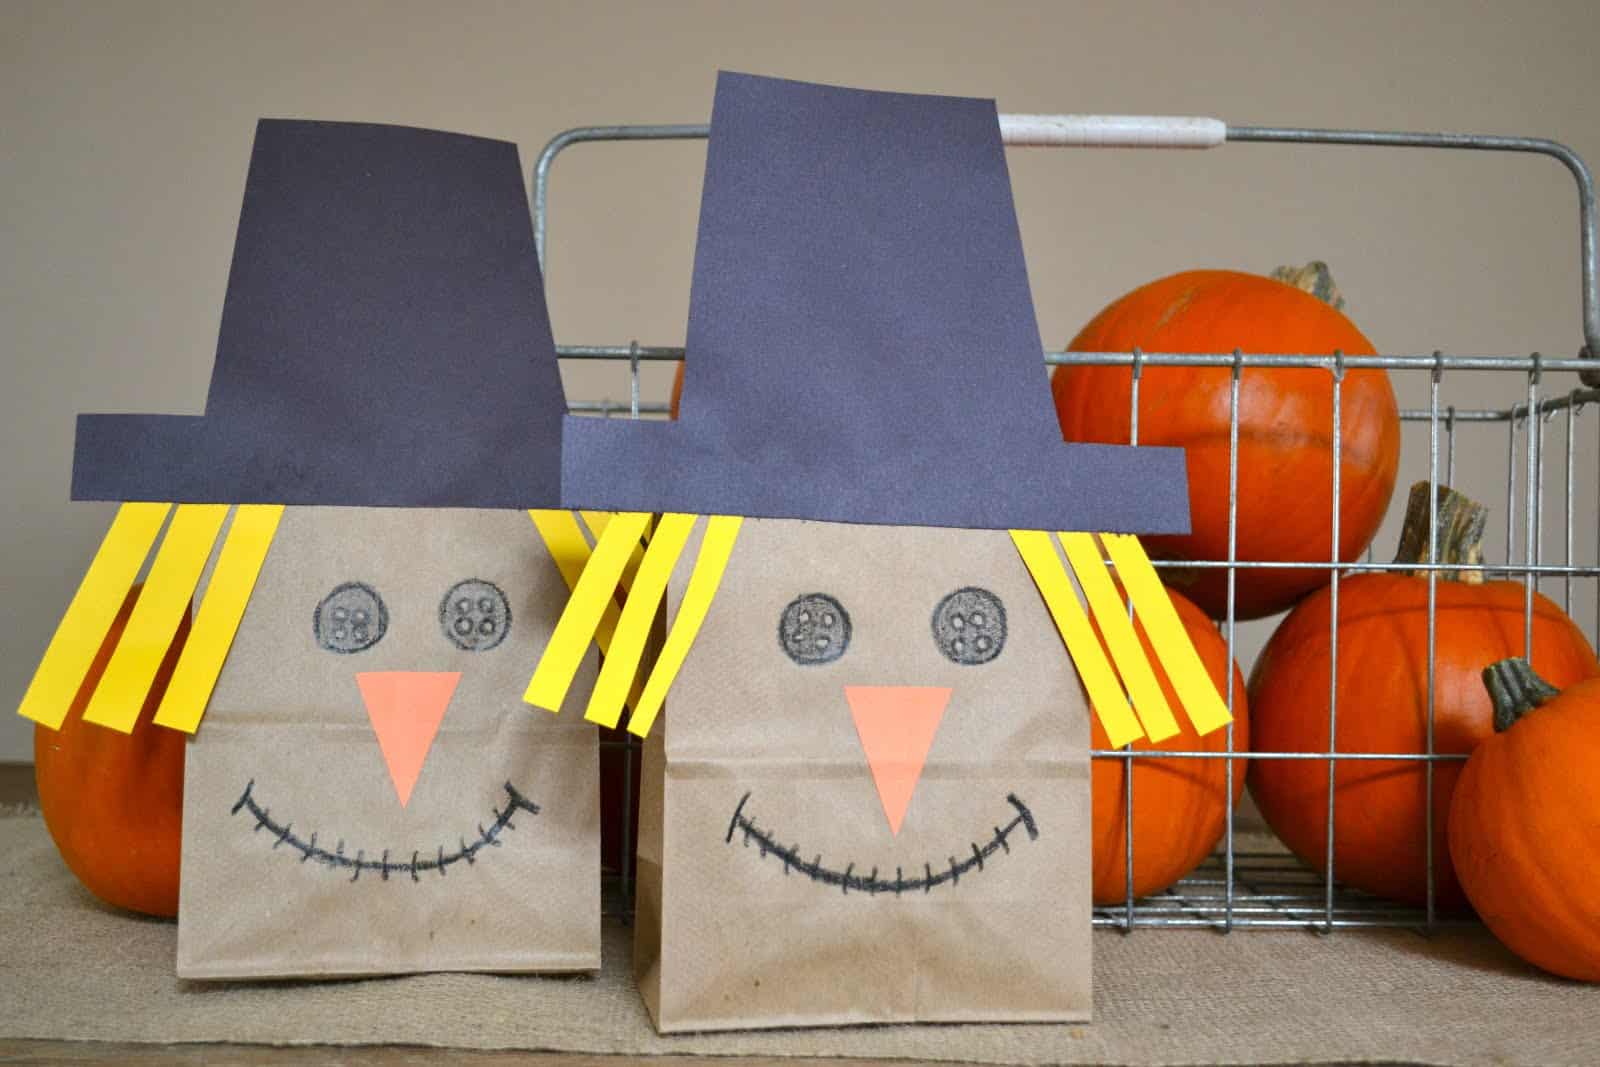 Paper bag scarecrows